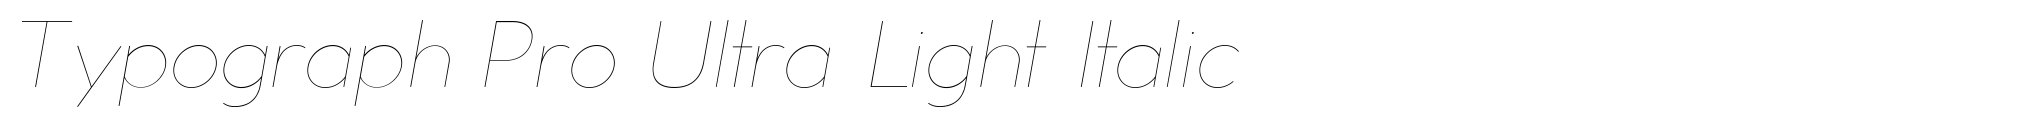 Typograph Pro Ultra Light Italic image